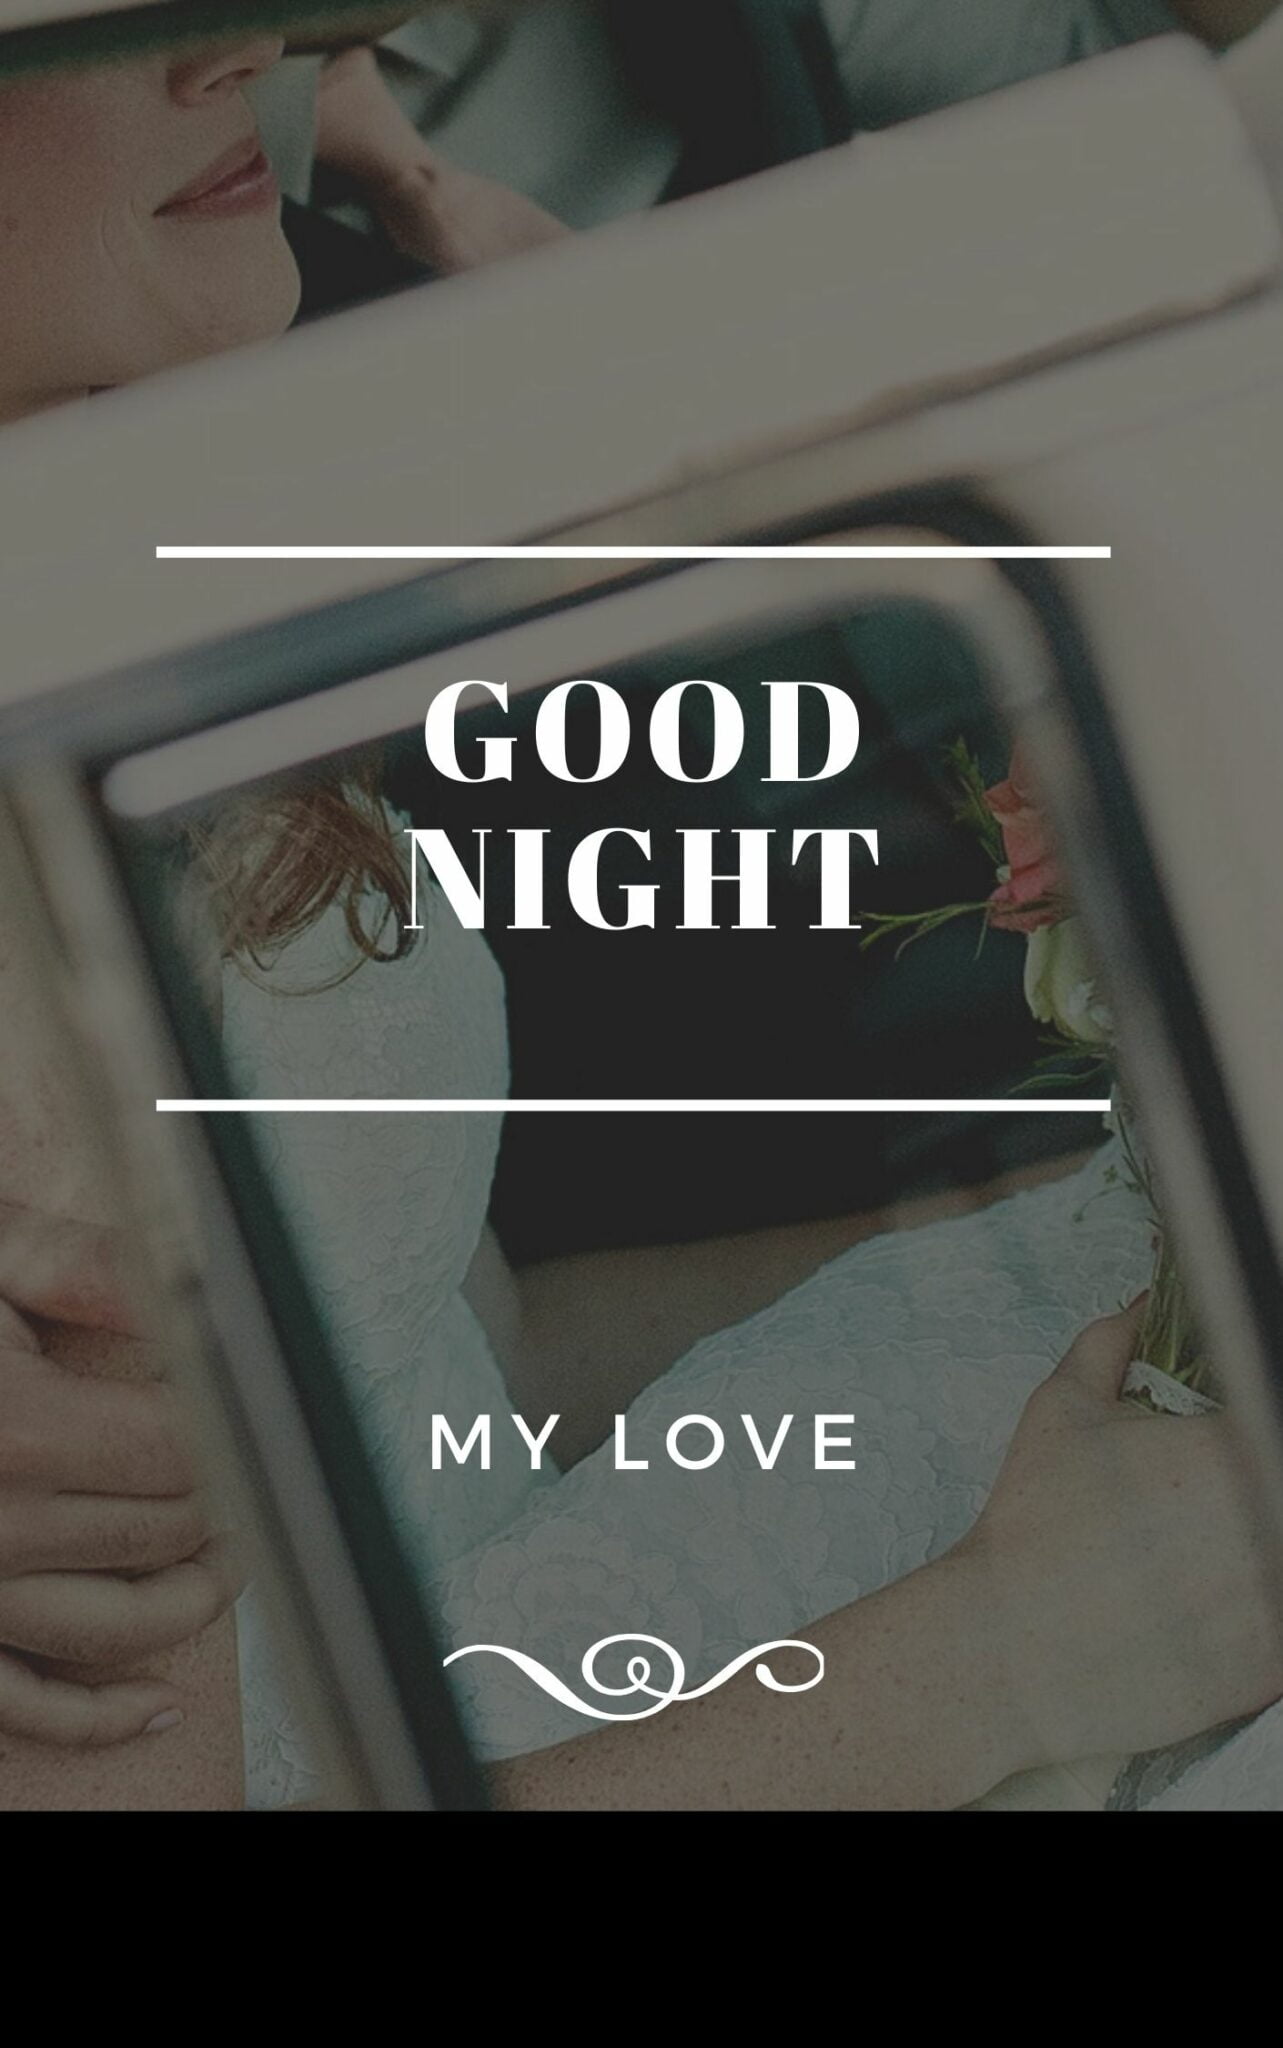 Good Night My Love free image